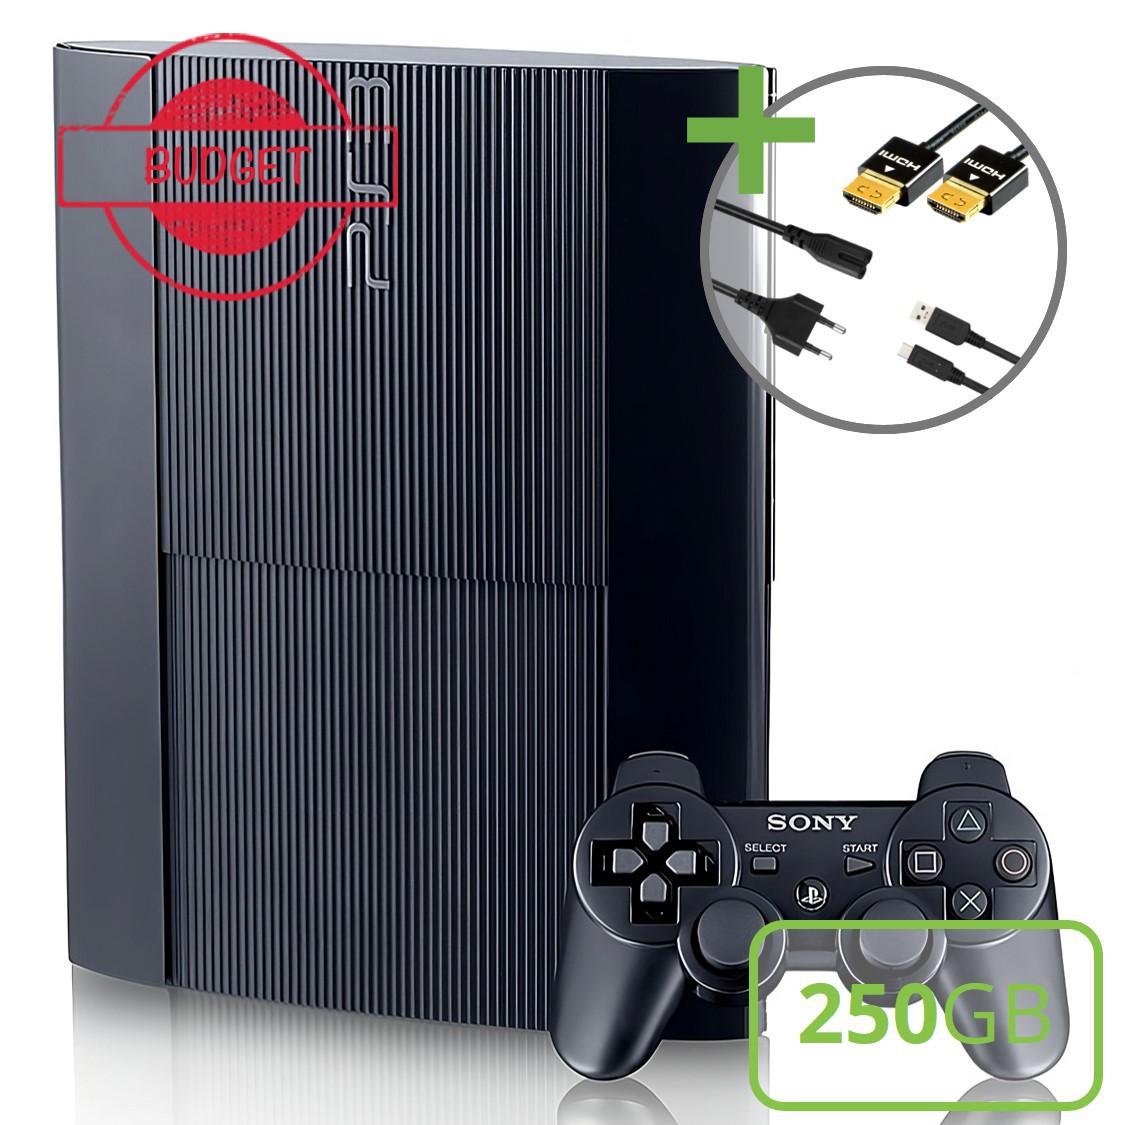 Sony PlayStation 3 Super Slim (250GB) Starter Pack - DualShock Edition - Budget - Playstation 3 Hardware - 2